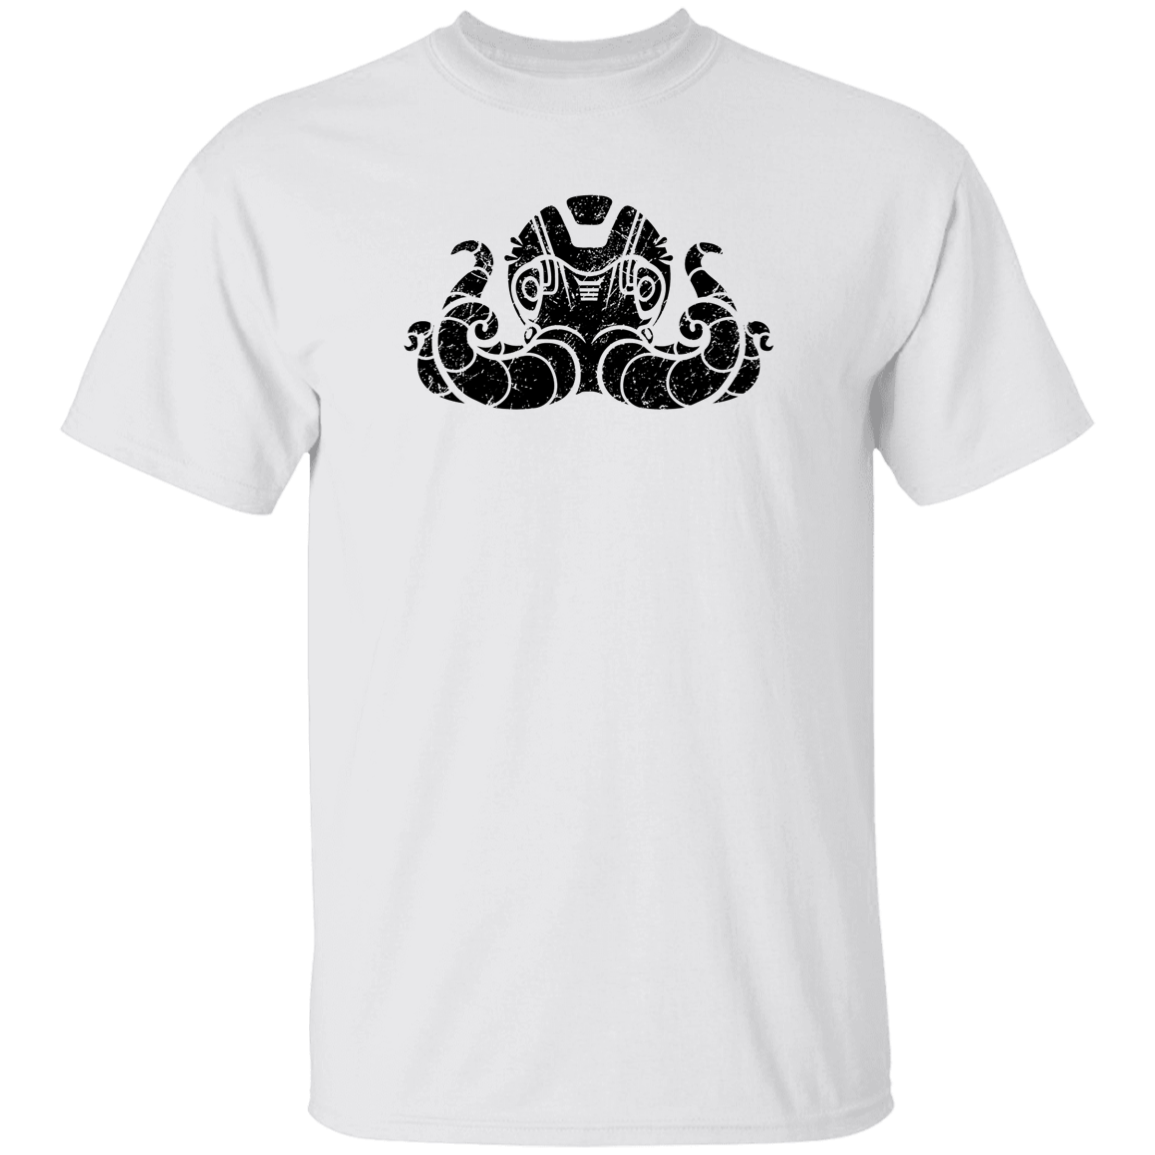 Black Distressed Emblem T-Shirt for Kids (Octopus/Matey)